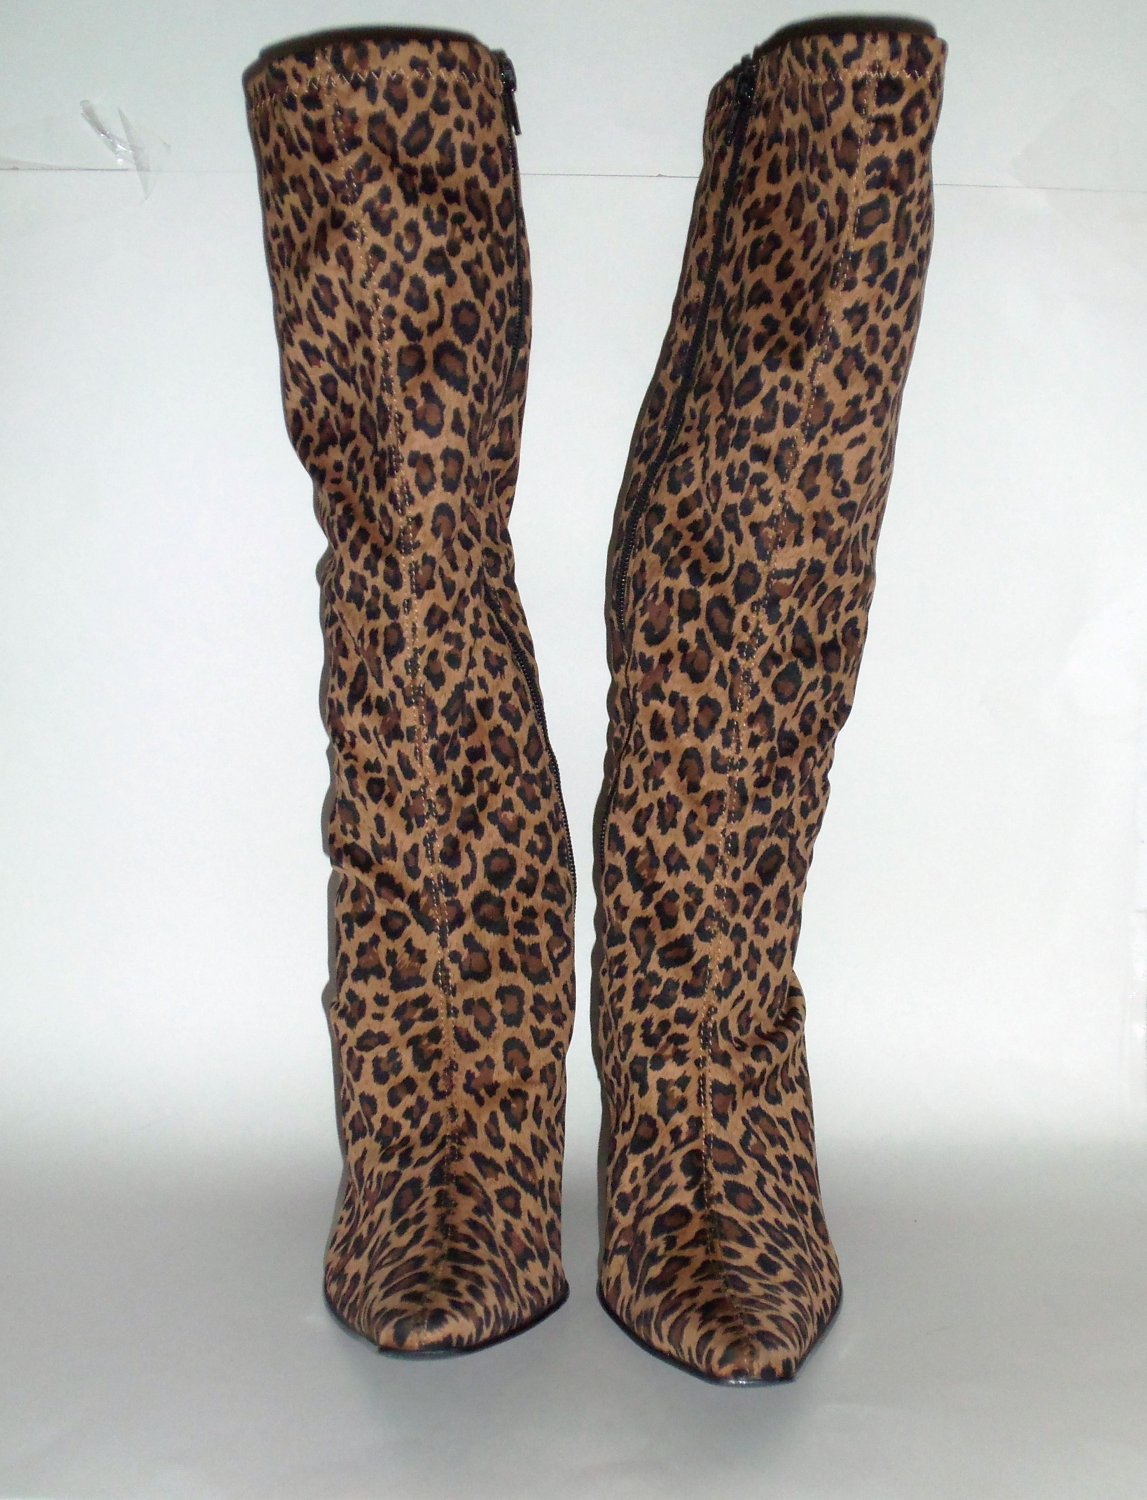 Baker Cougar Leopard Boots Size 8.5B